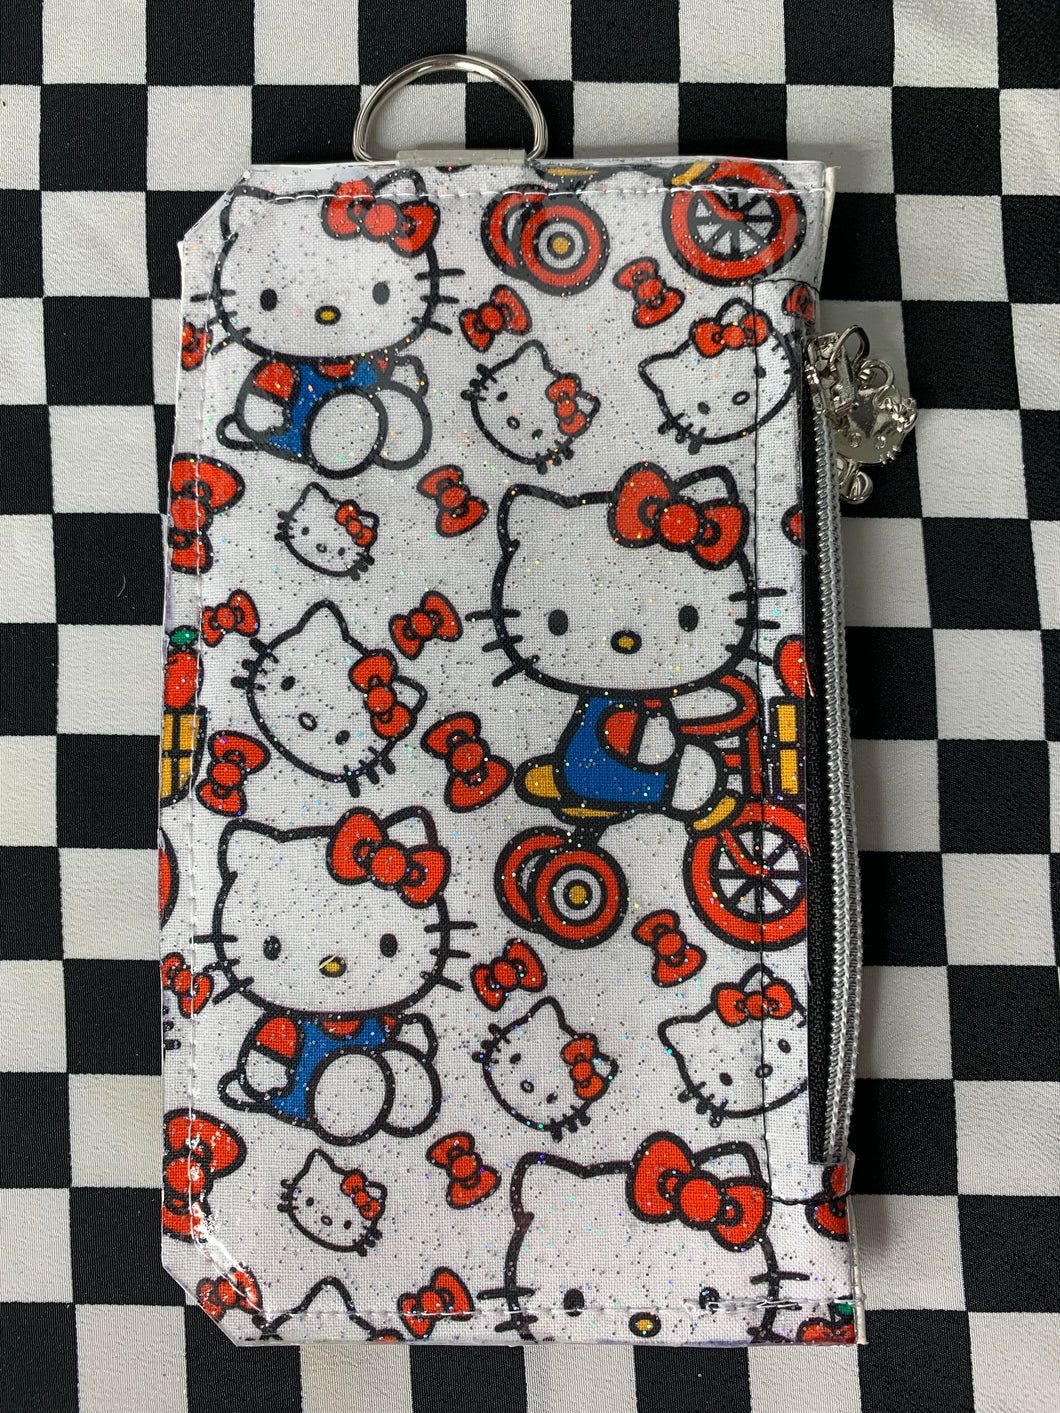 Hello Kitty fan art card and phone wallet